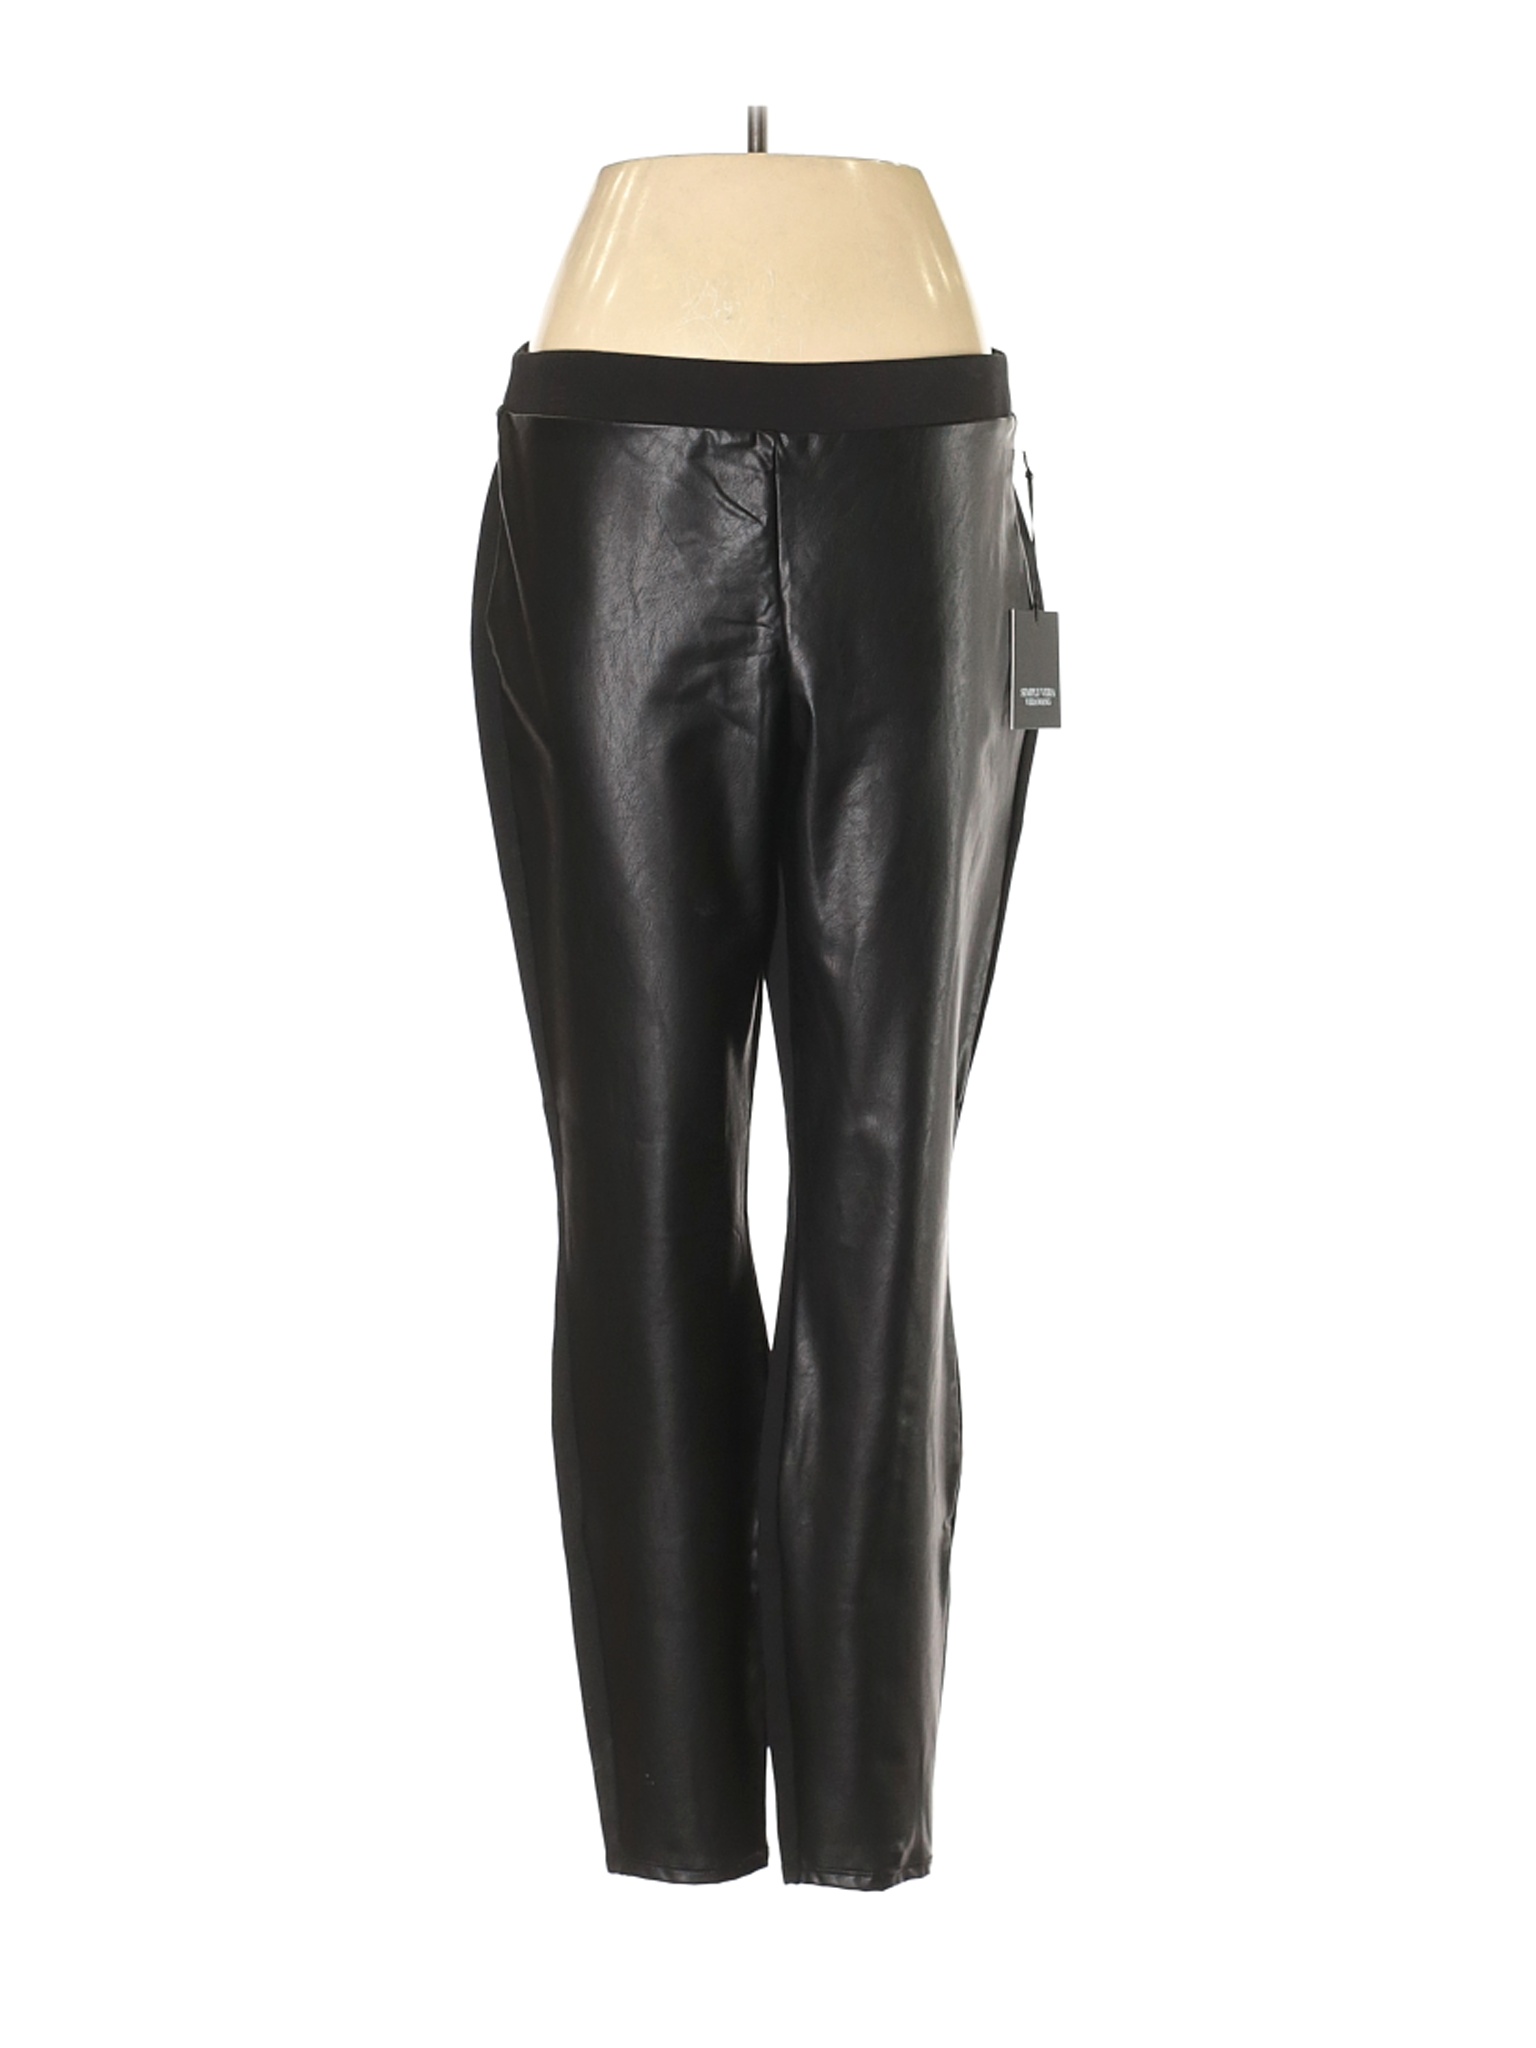 NWT Simply Vera Vera Wang Women Black Dress Pants M | eBay